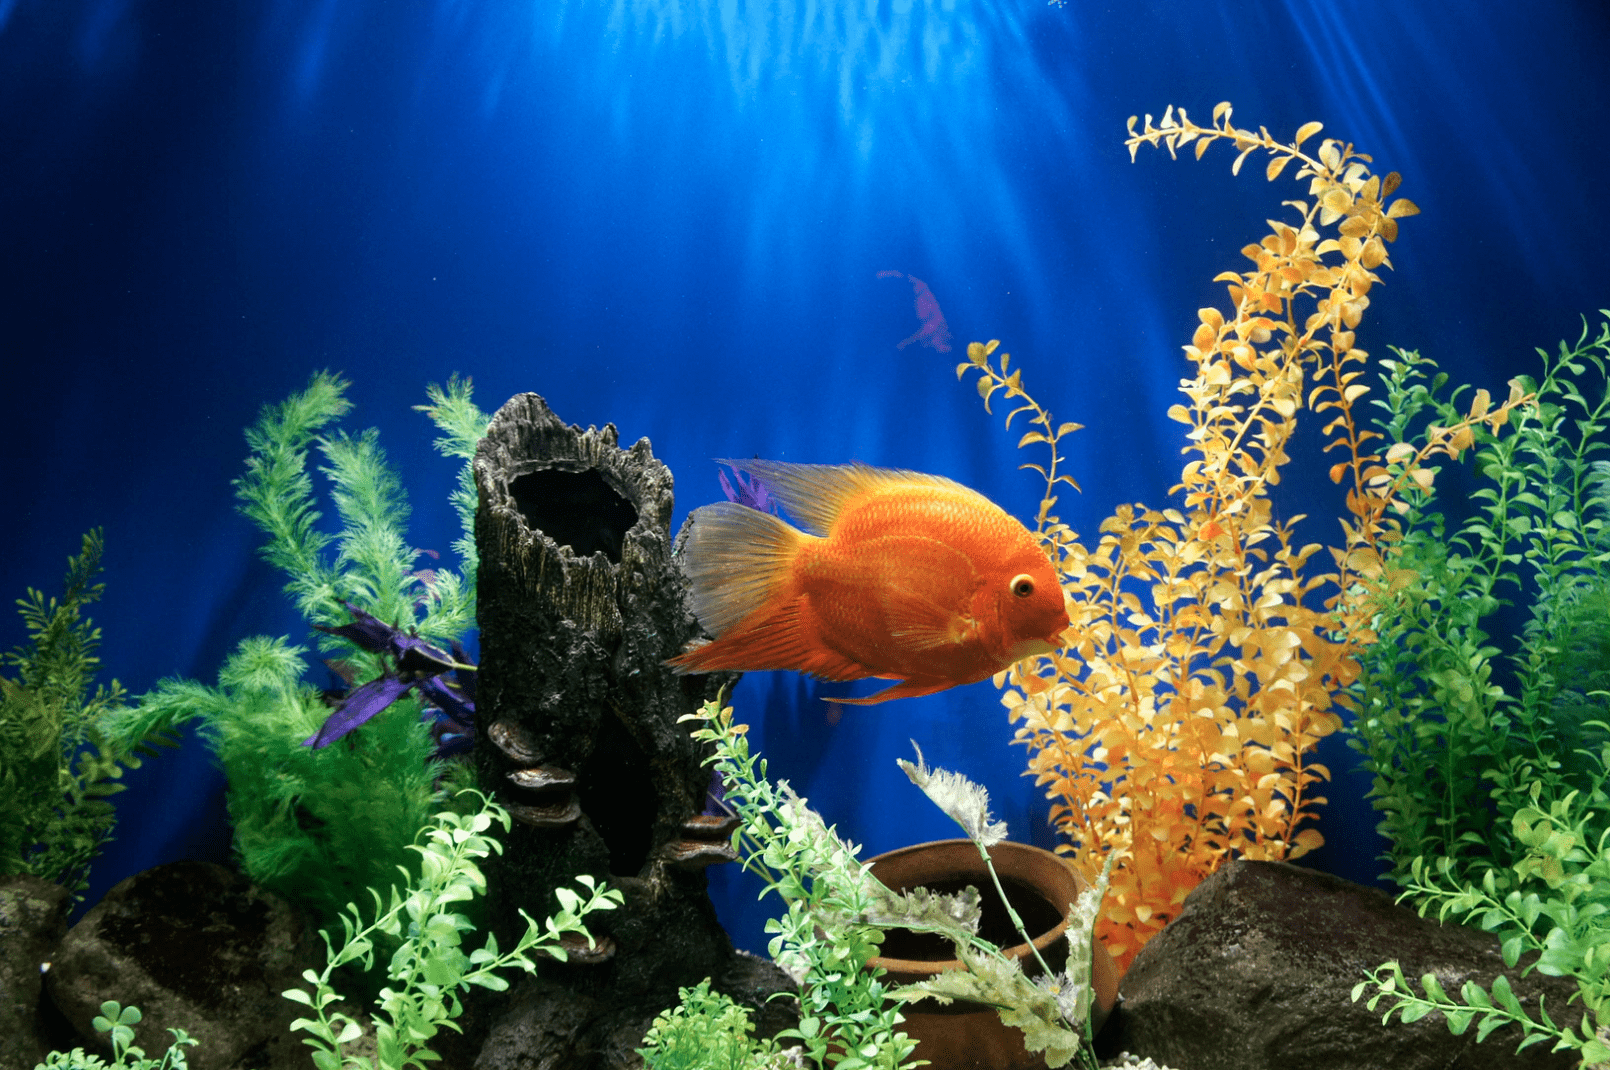 yellow fish swimming underwater with plants